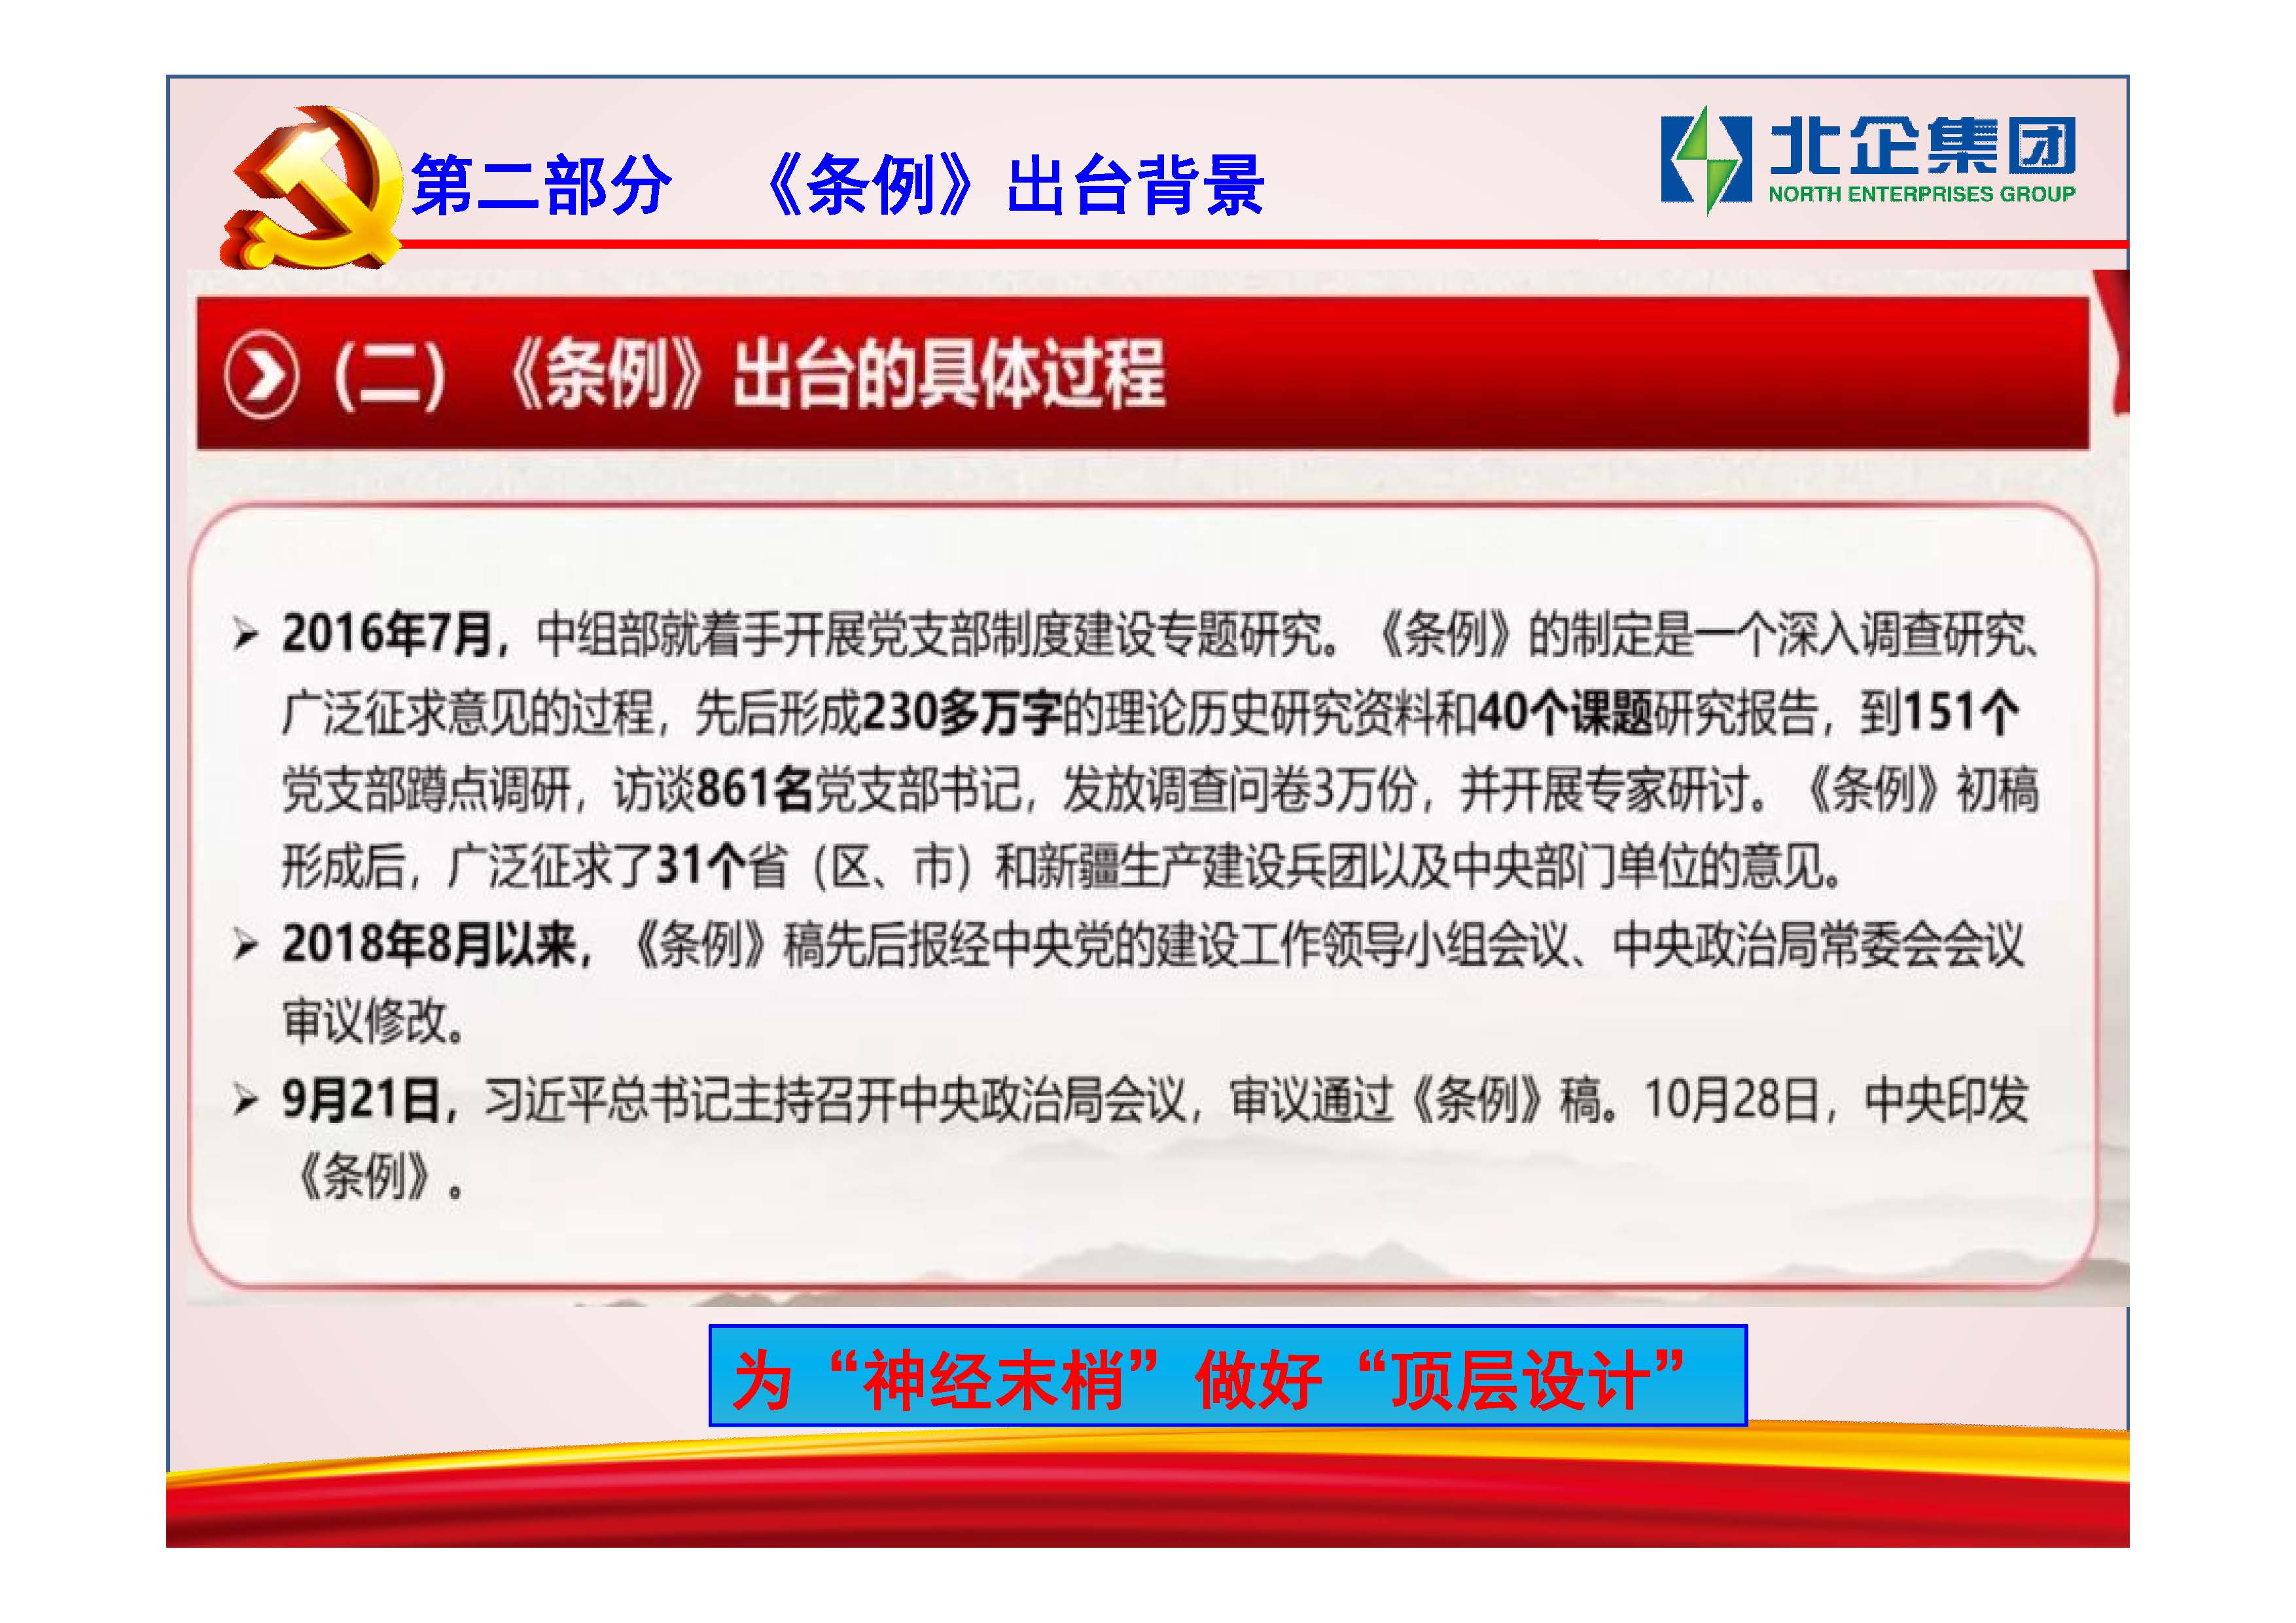 [PPT]中国兵器装备集团洛阳北方企业集团有限公司《建强“小”支部 发挥“大”作用》